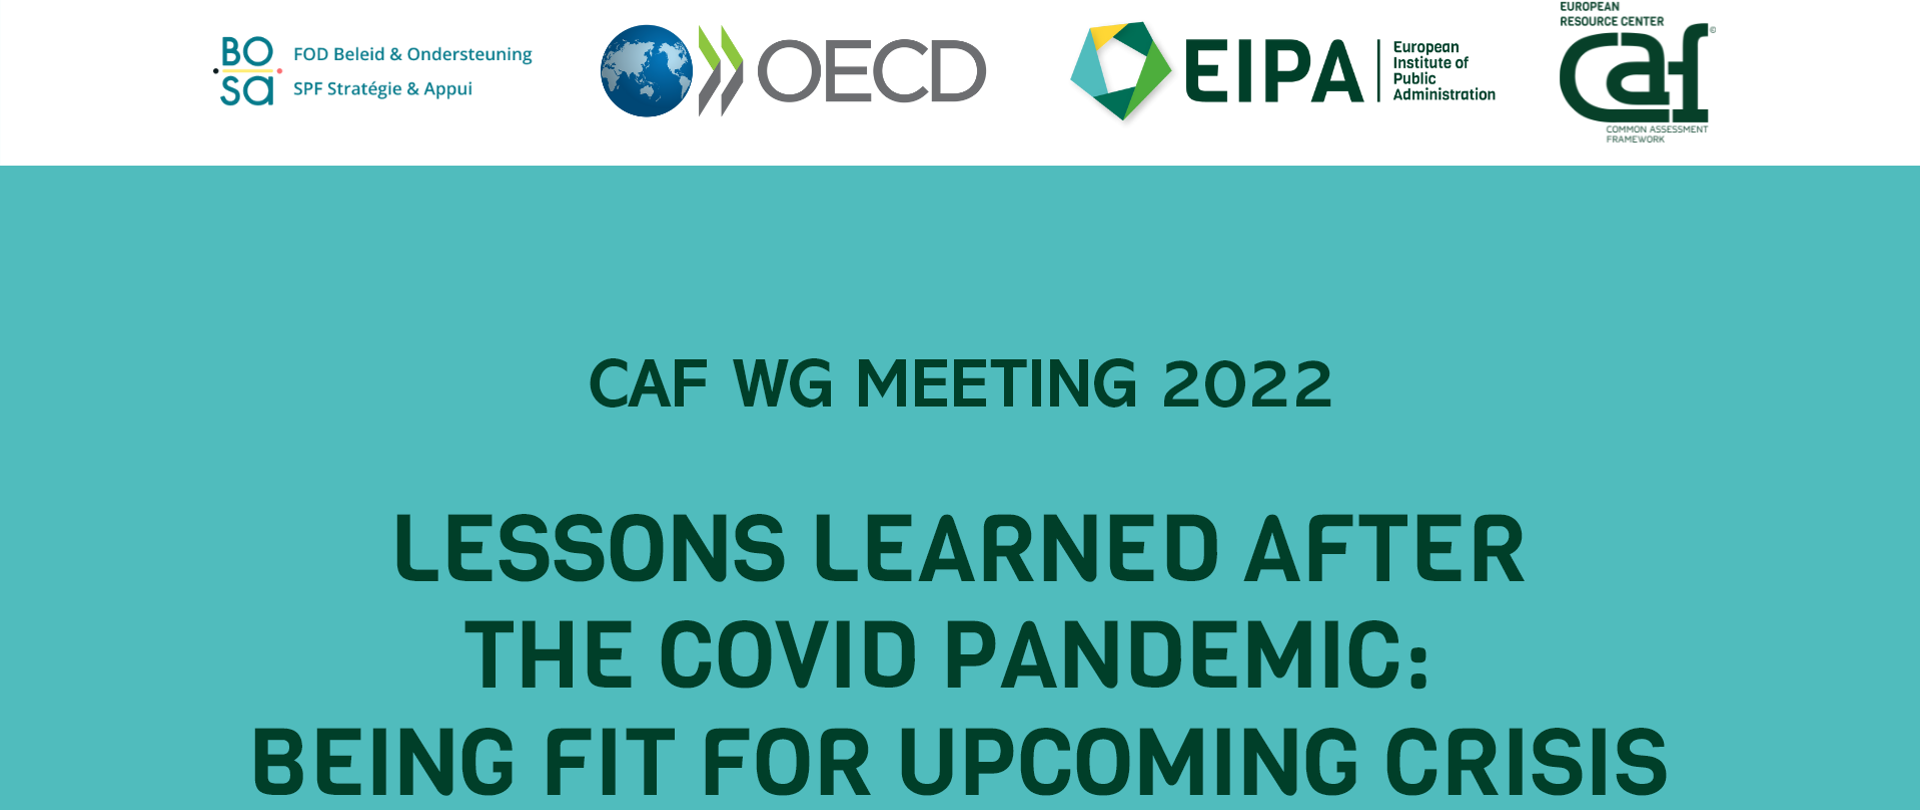 Logo BOSA, OECD, EIPA i CAF - "Lessons learned after the COVID pandemic: being fit for upcoming crises" - tytuł spotkania krajowych korespondentów CAF w Brukseli, 23-24 czerwca 2022 roku